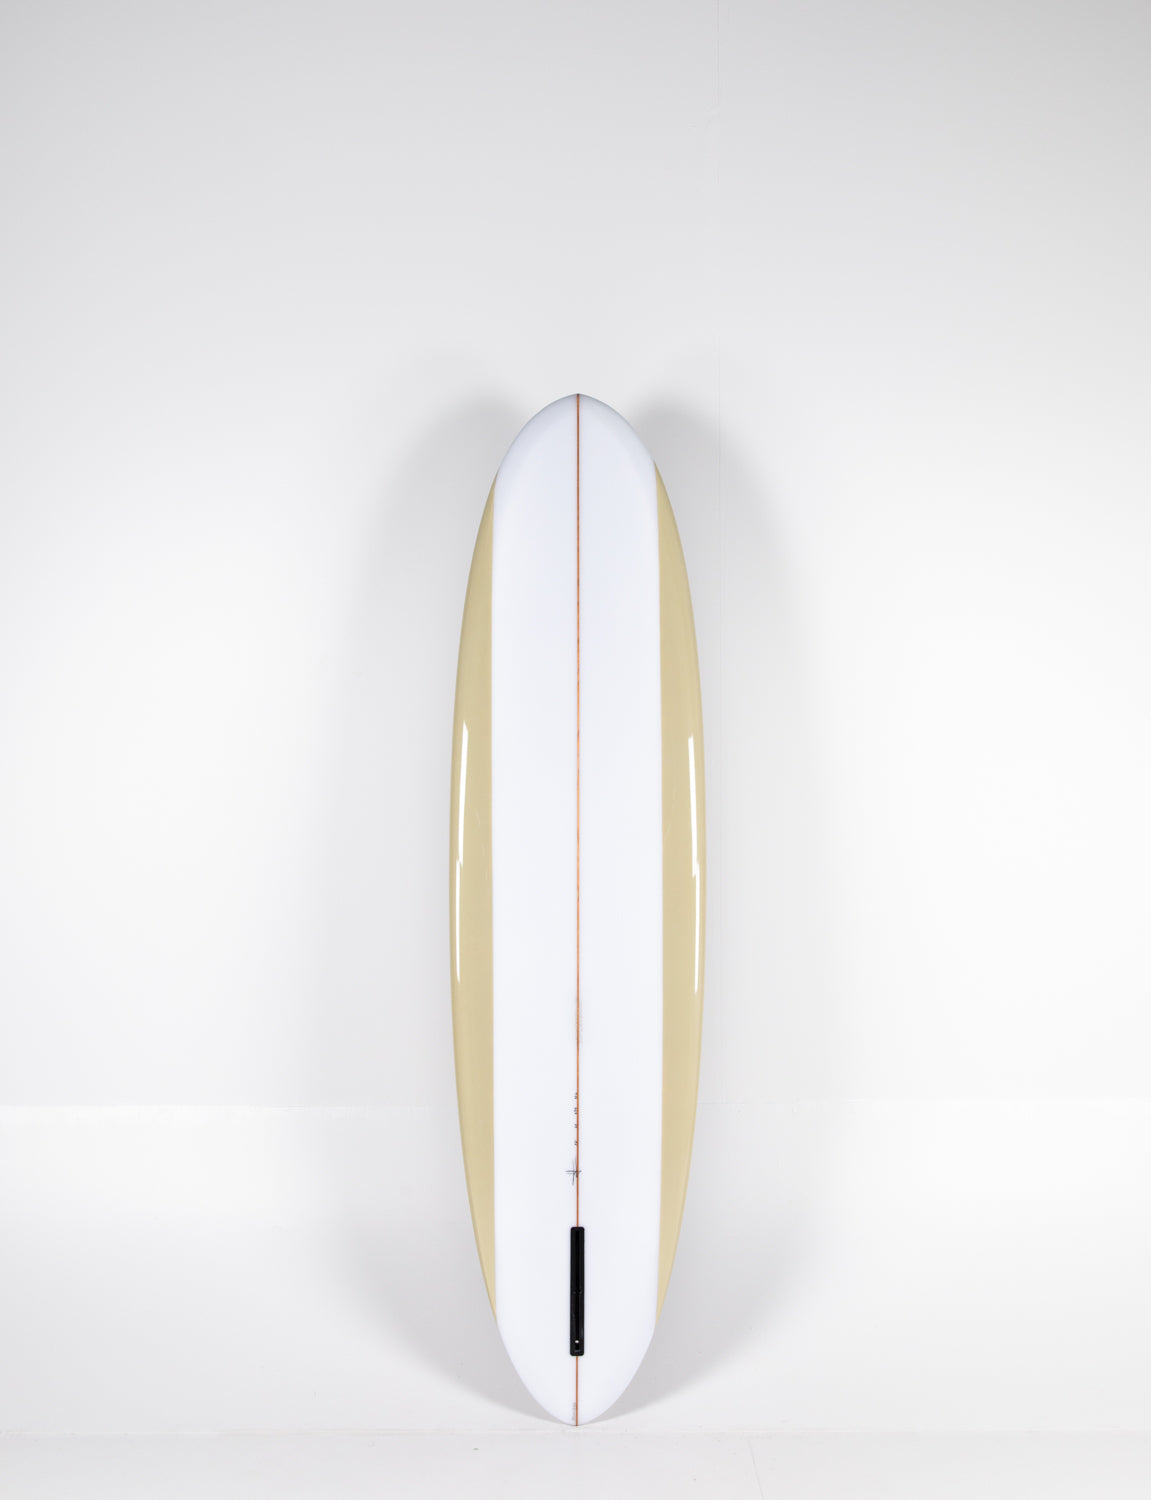 Pukas Surf Shop - Pukas Surfboard - MID LENGTH by Son Of Cobra - 7’2” x 21 x 2 3/4 - 47L - PL00350